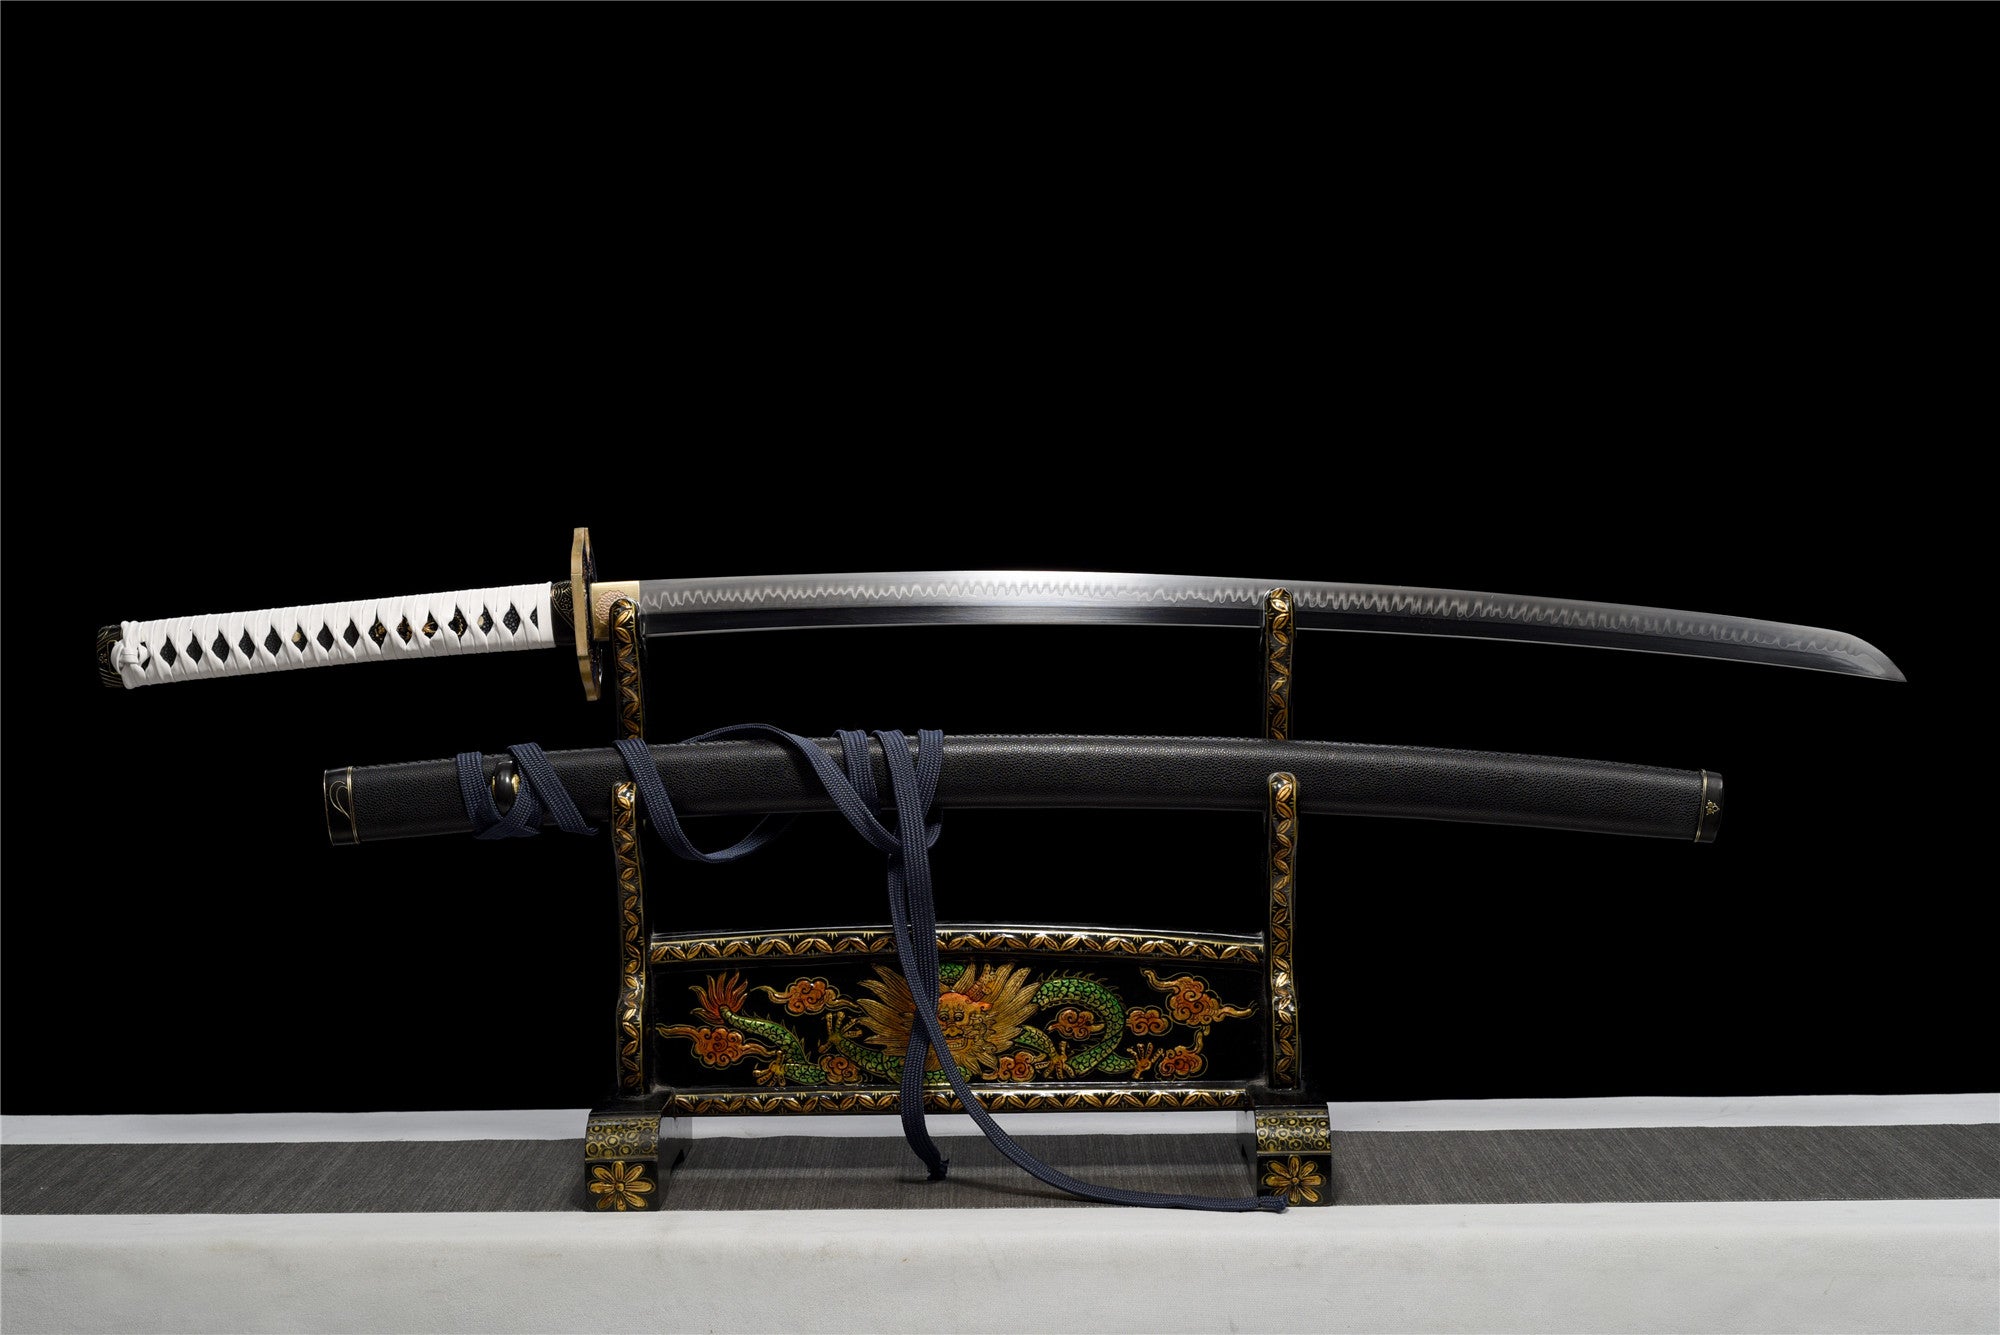 Anime Katana Sword,Devil May Cry 5 Anime Cosplay,Vergil’s Yamato Sword Real Handmade Japanese Samurai Sword,T10 Steel Clay Tempered With Hamon